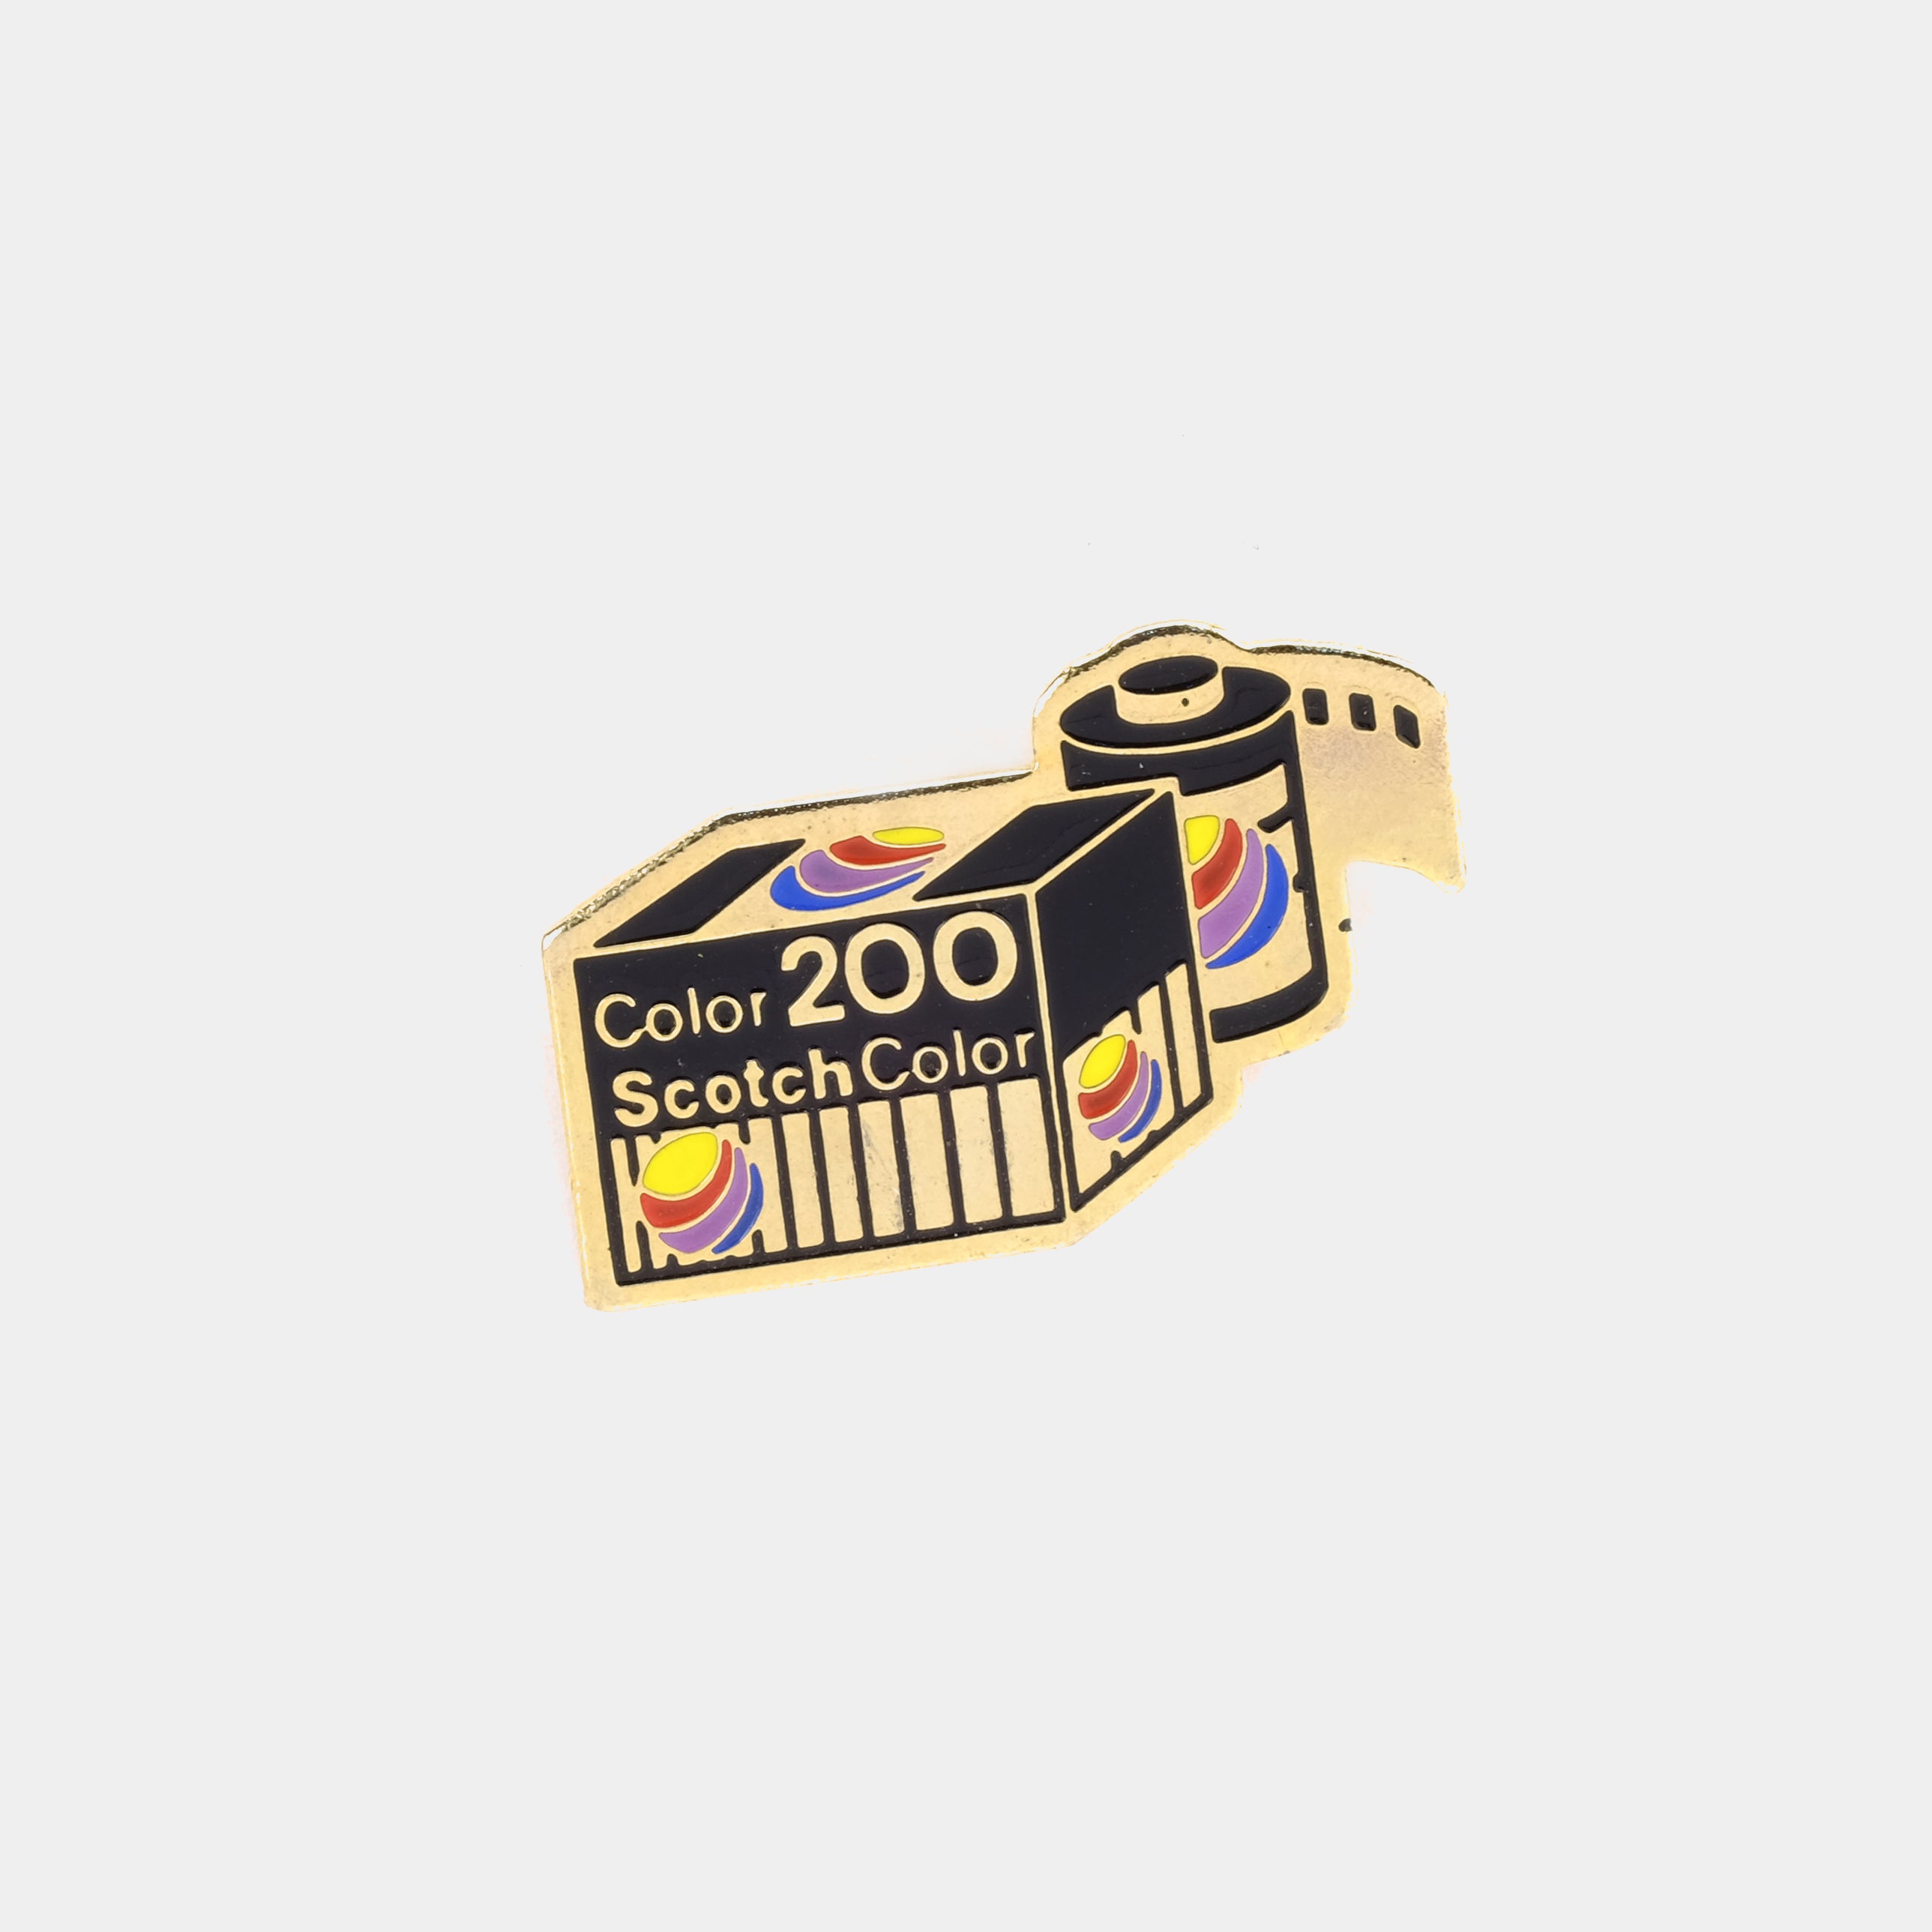 Scotch Color 200 Film Vintage Enamel Pin